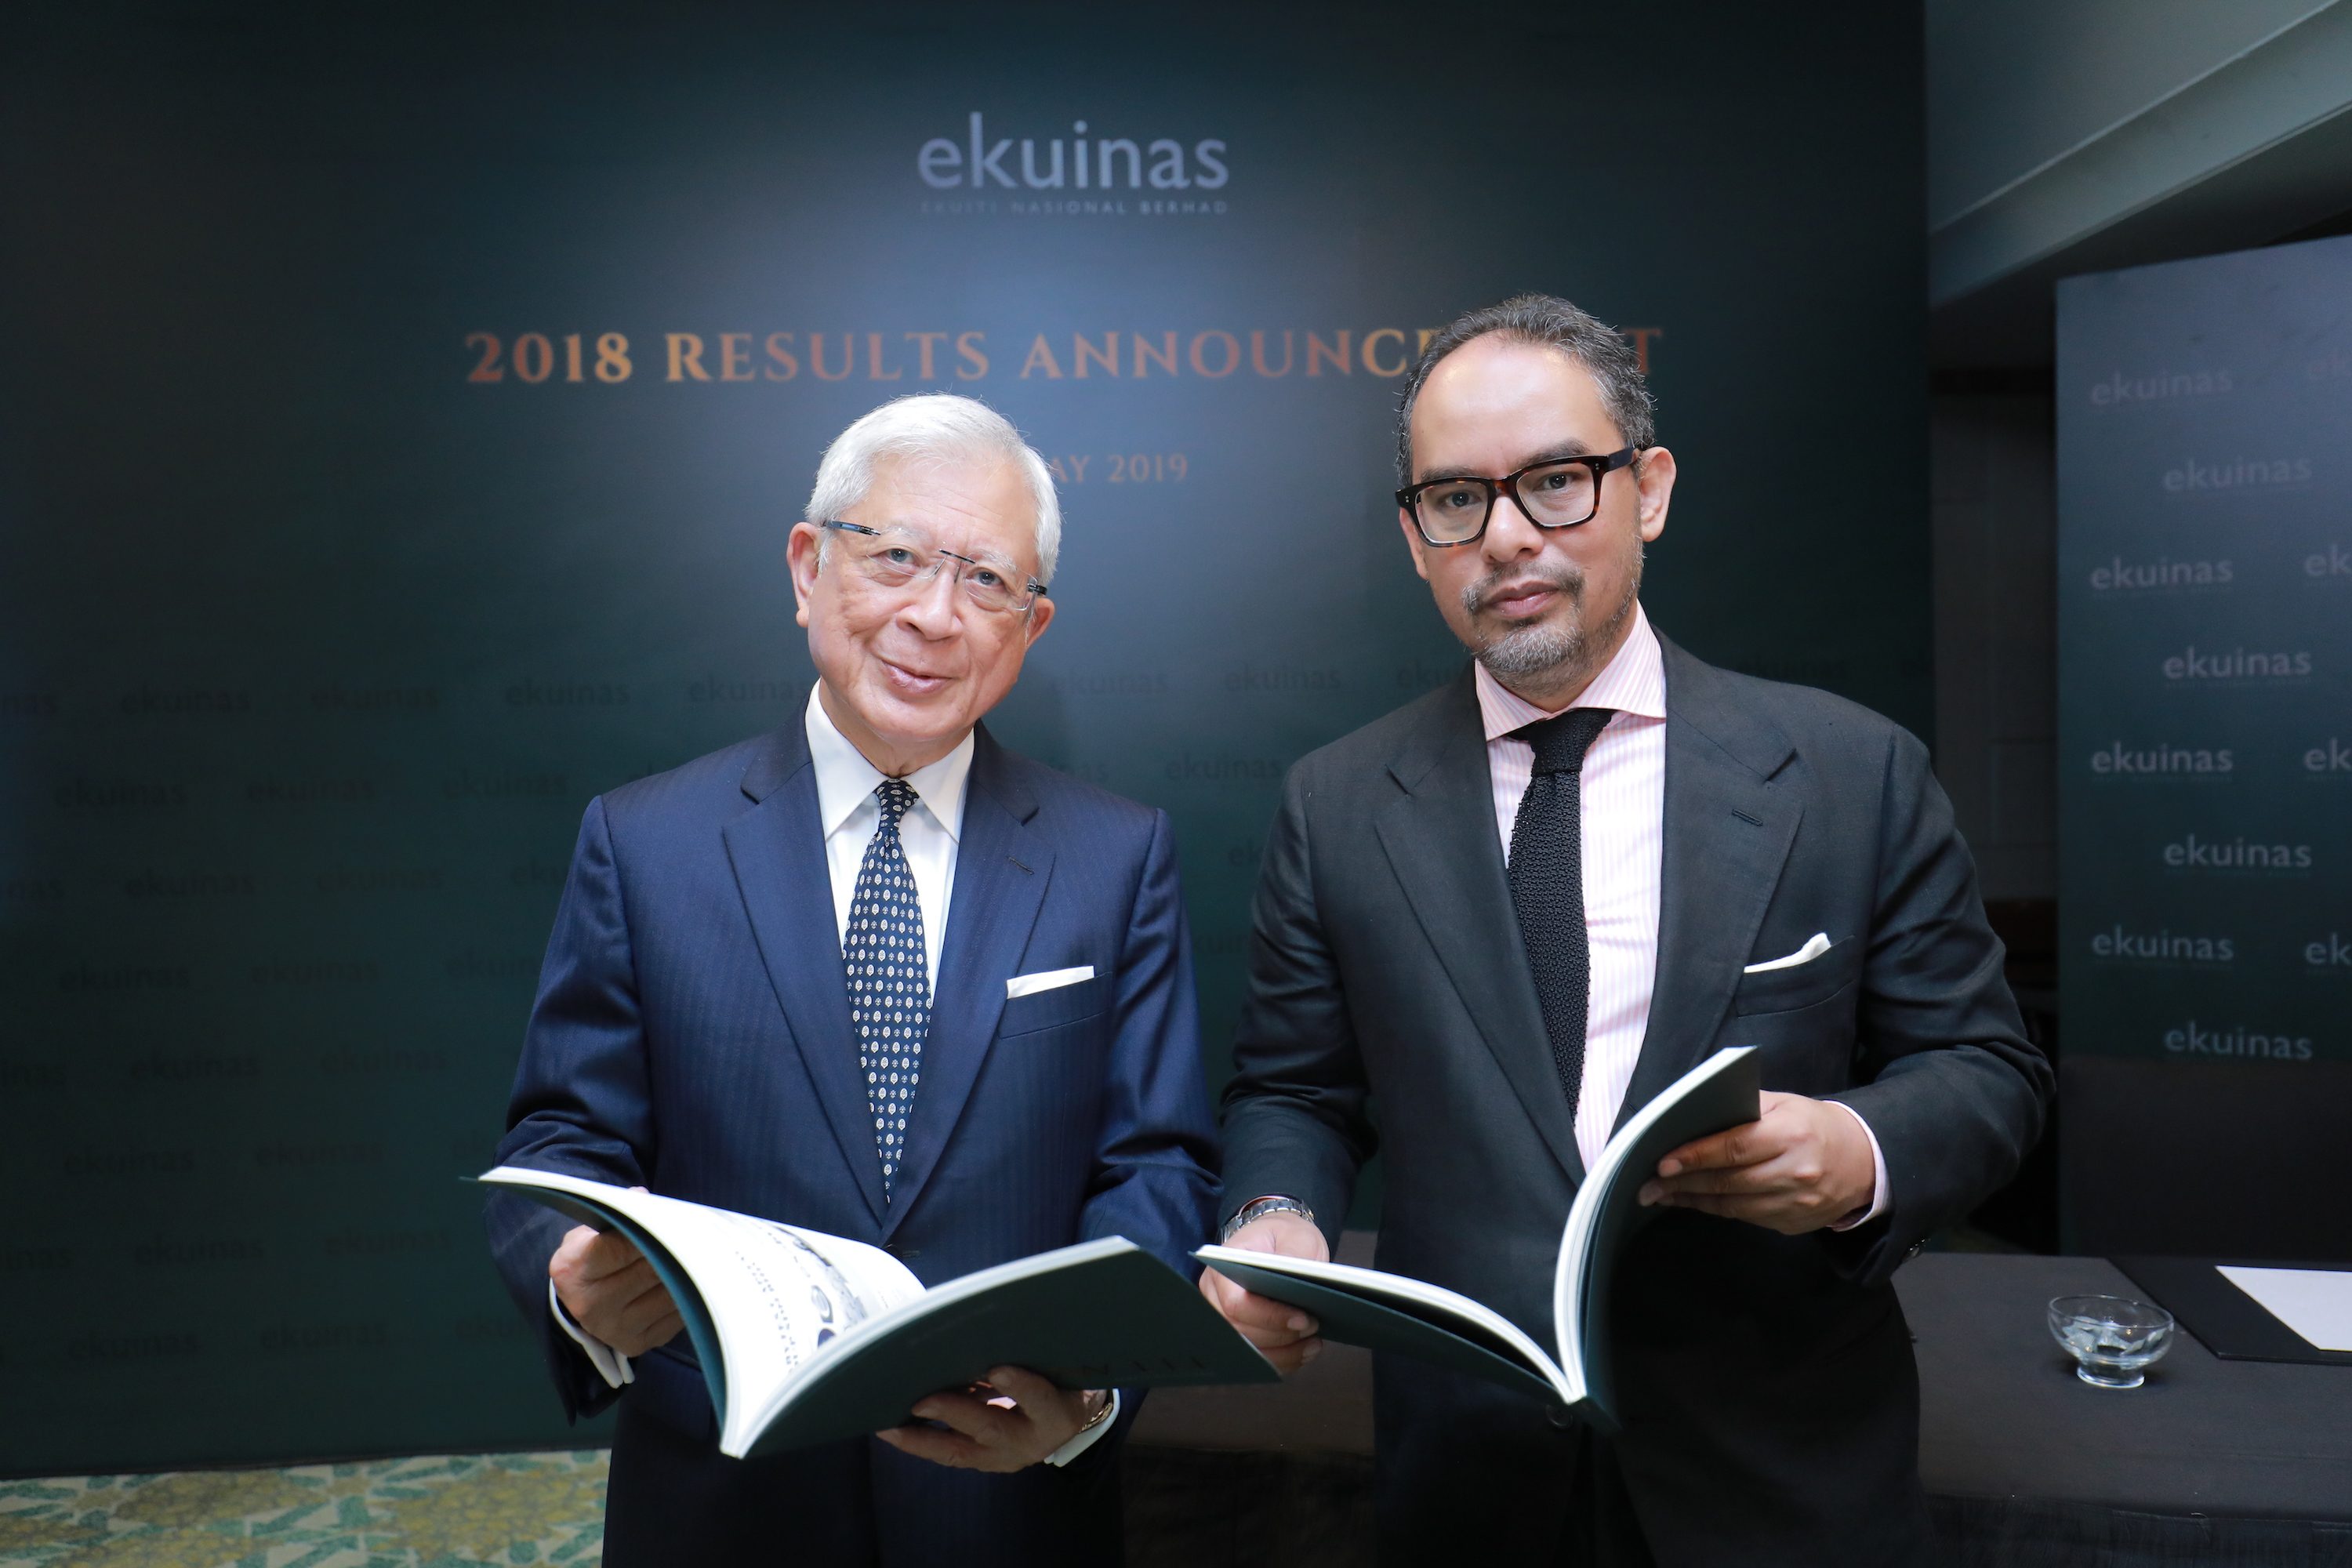 Malaysia's Ekuinas earmarks up to 15% for tech deals